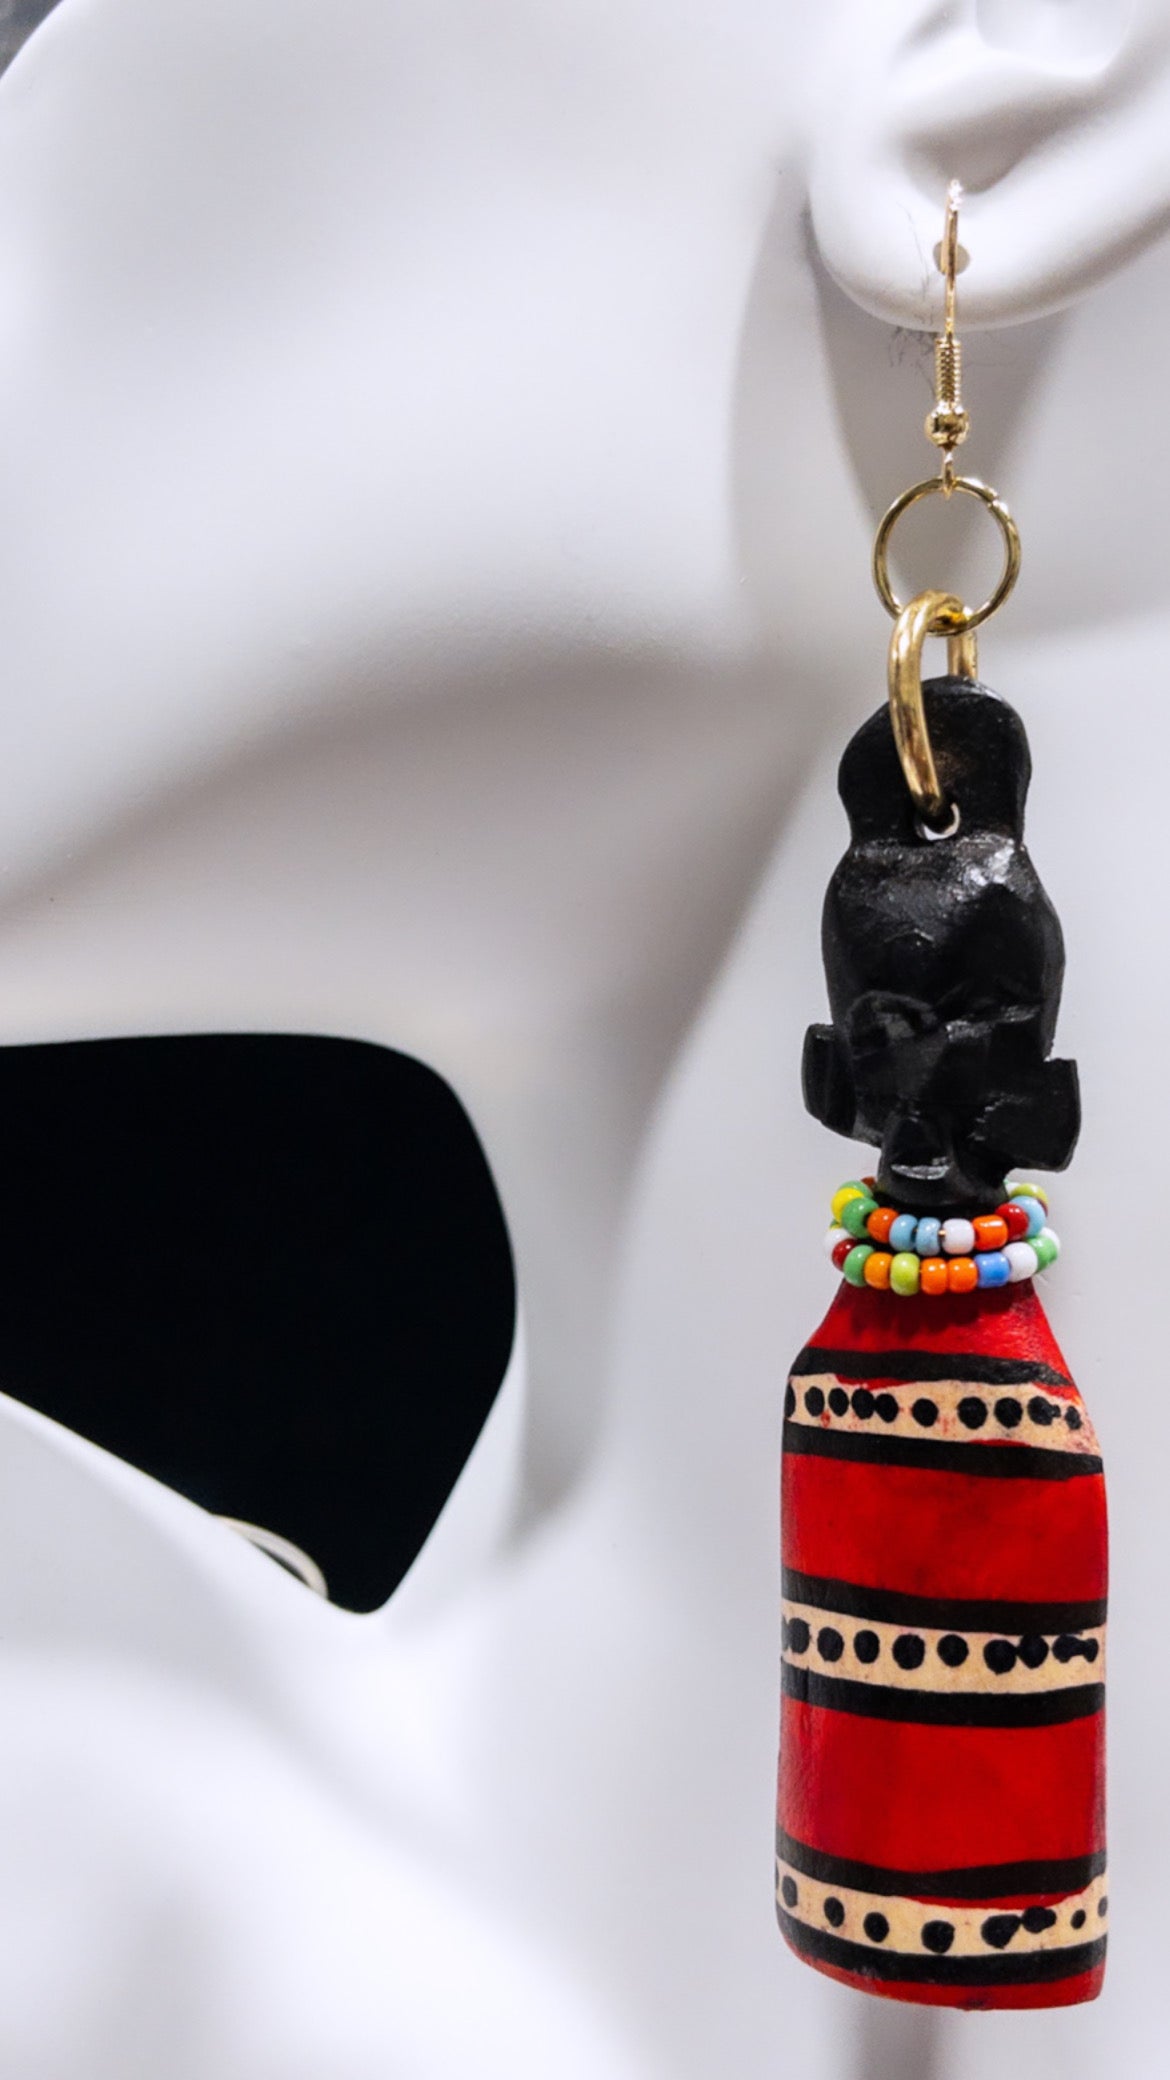 The Maasai Wood Crafted Earrings